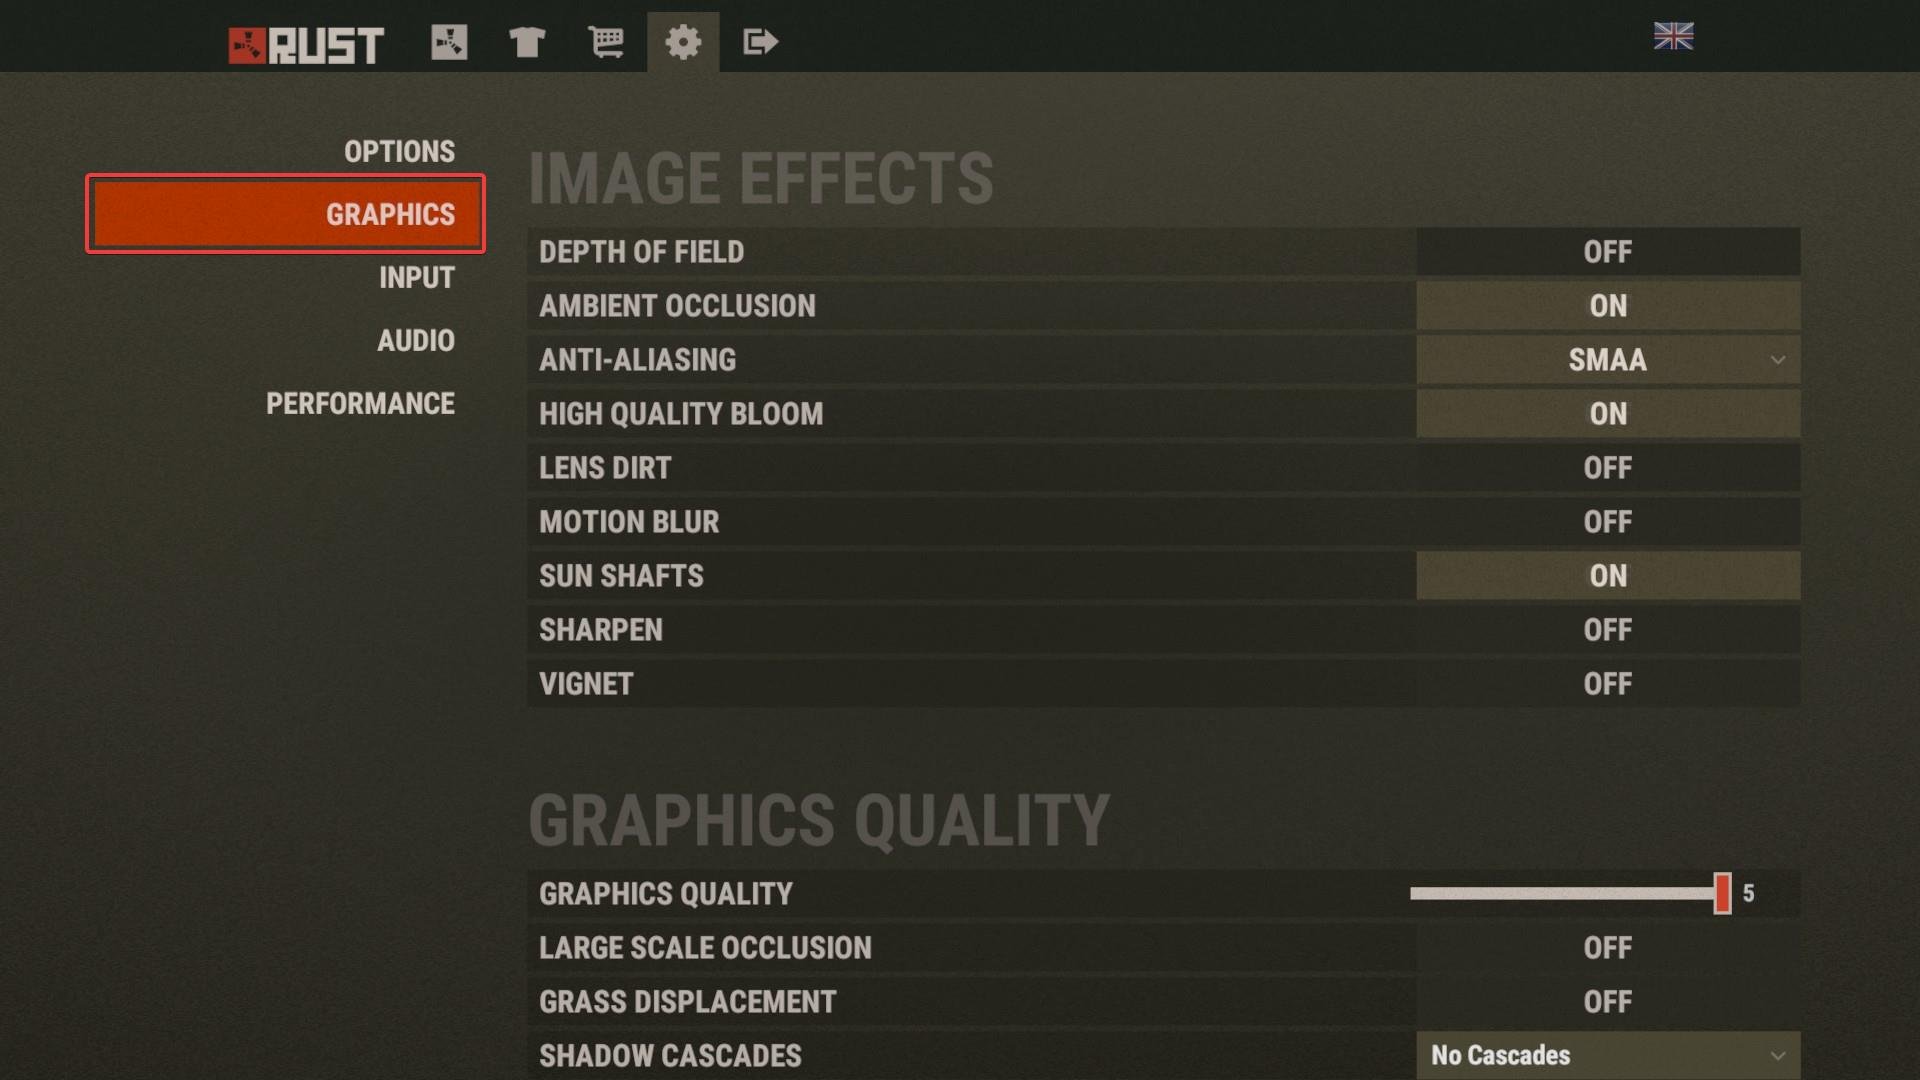 Adjust Rust graphics if low FPS.